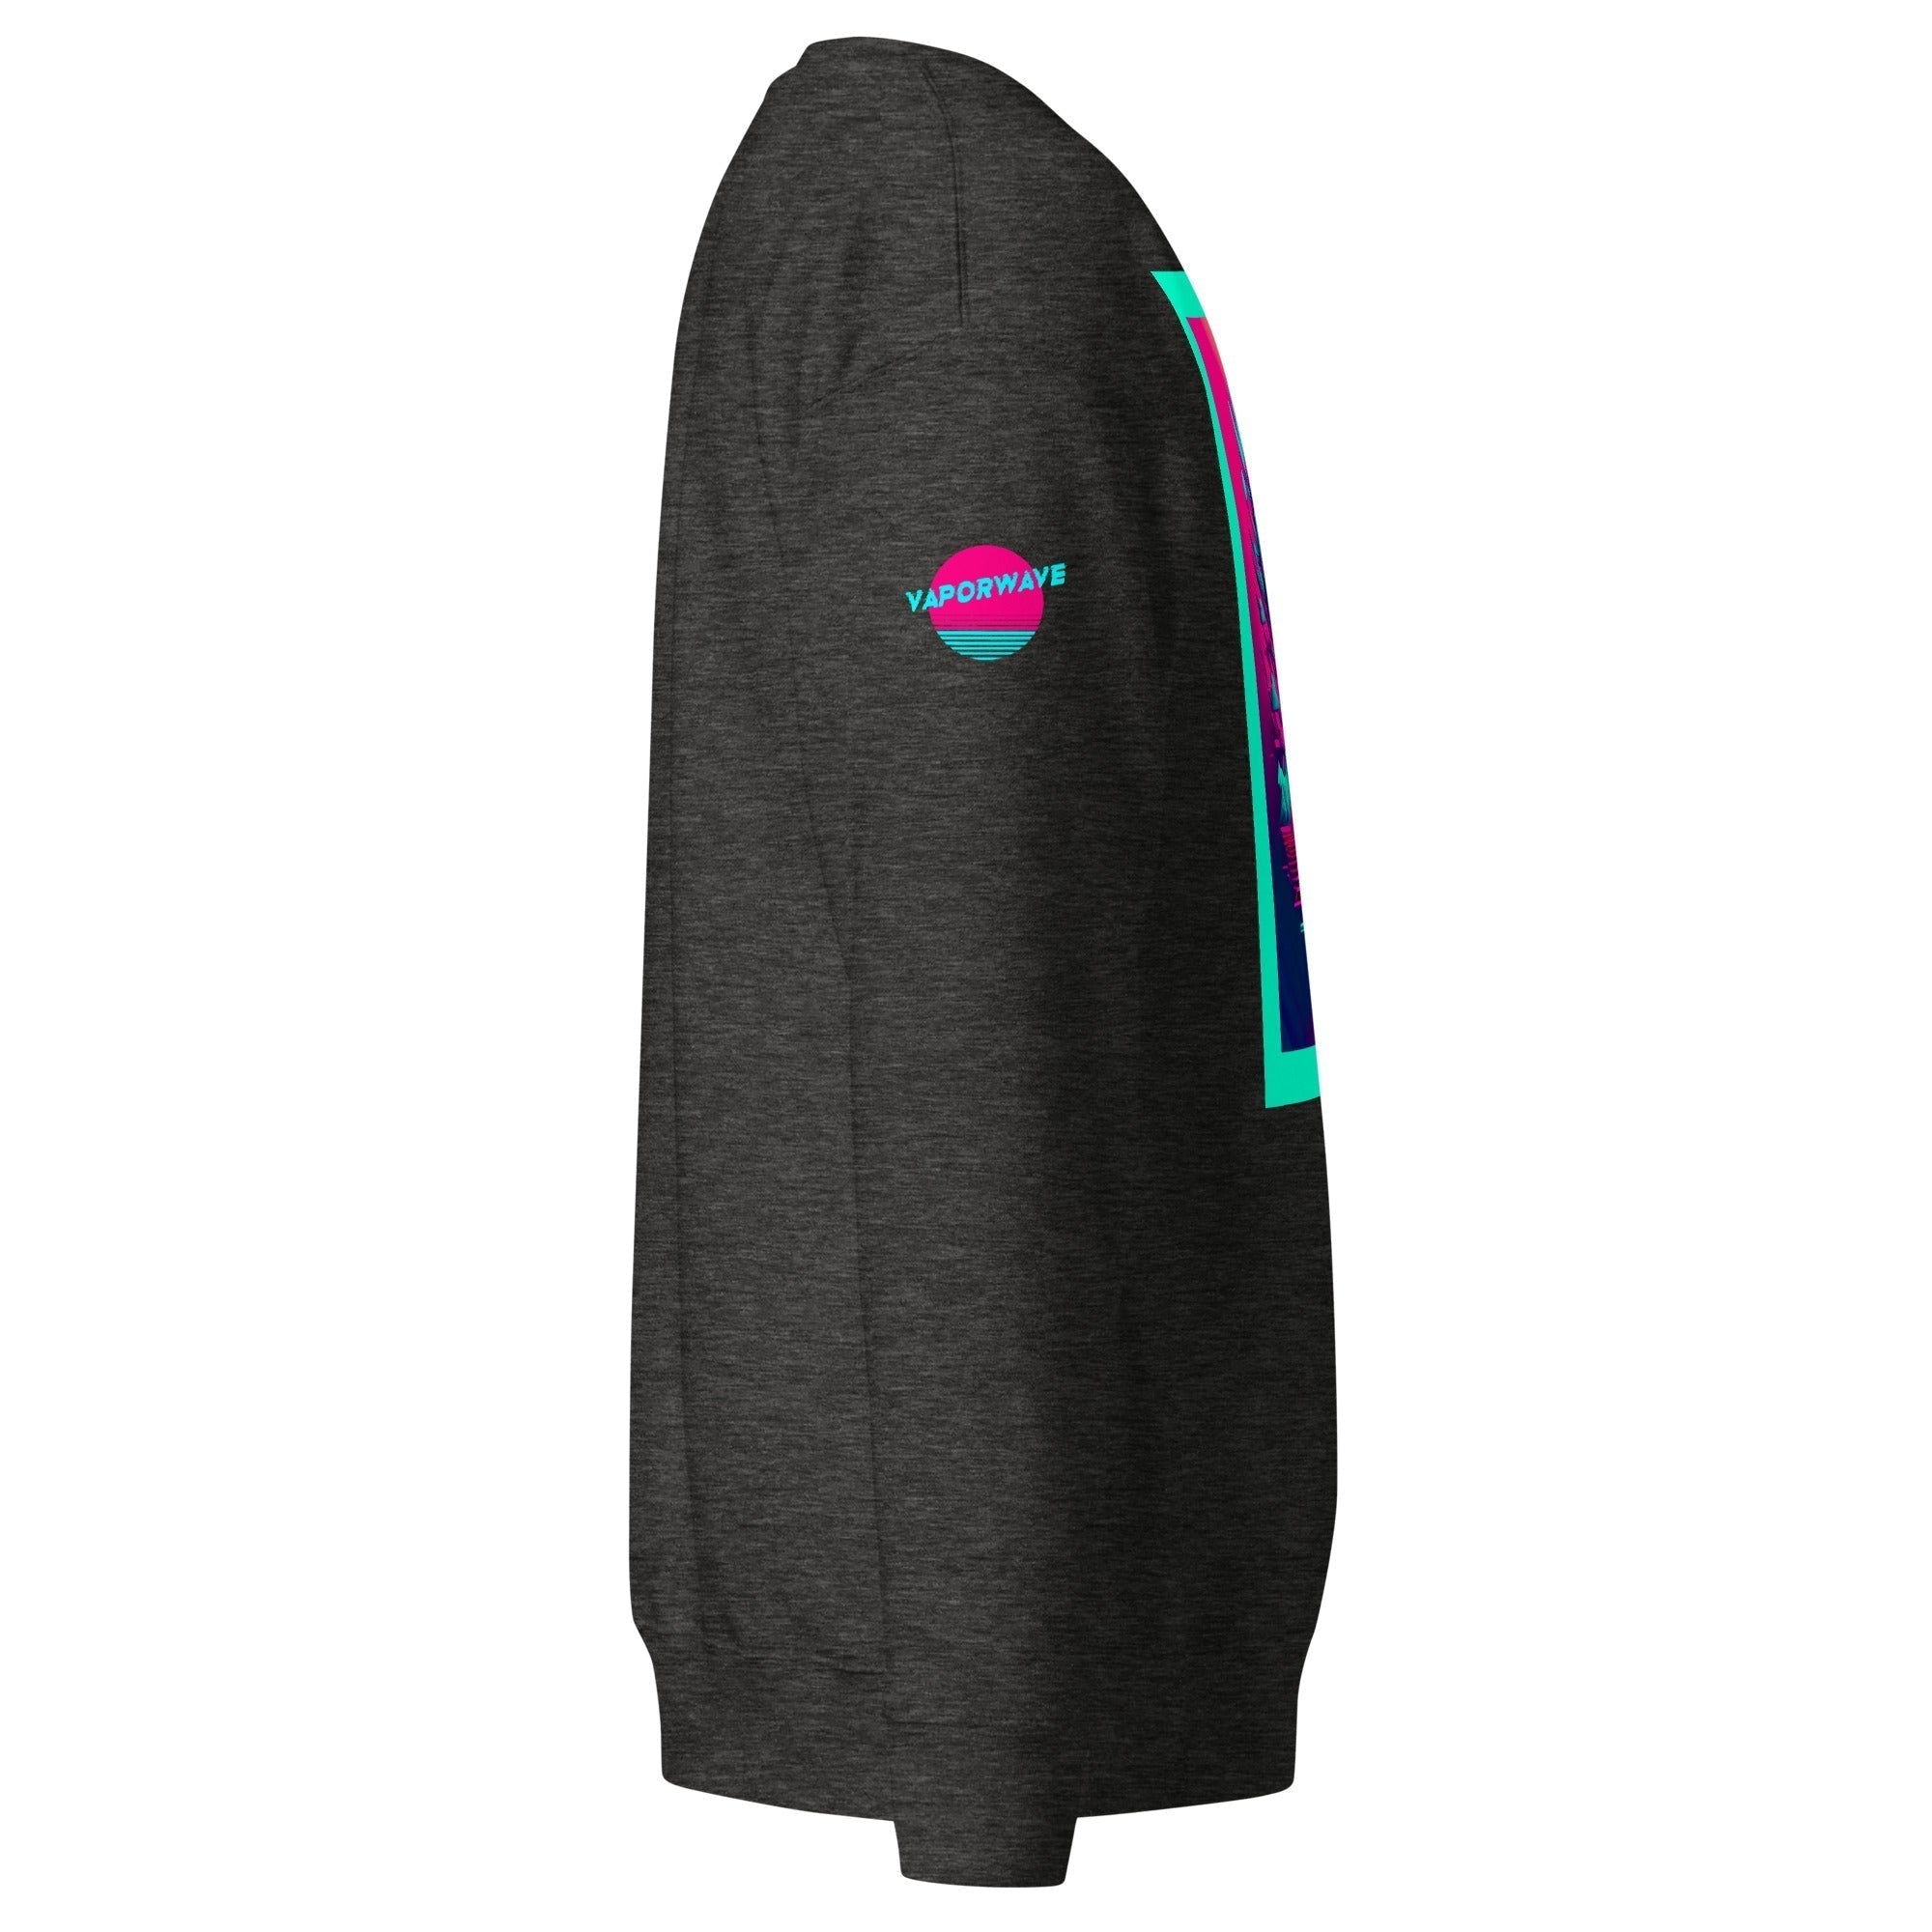 Unisex Premium Sweatshirt - Vaporwave Series v.26 - GRAPHIC T-SHIRTS